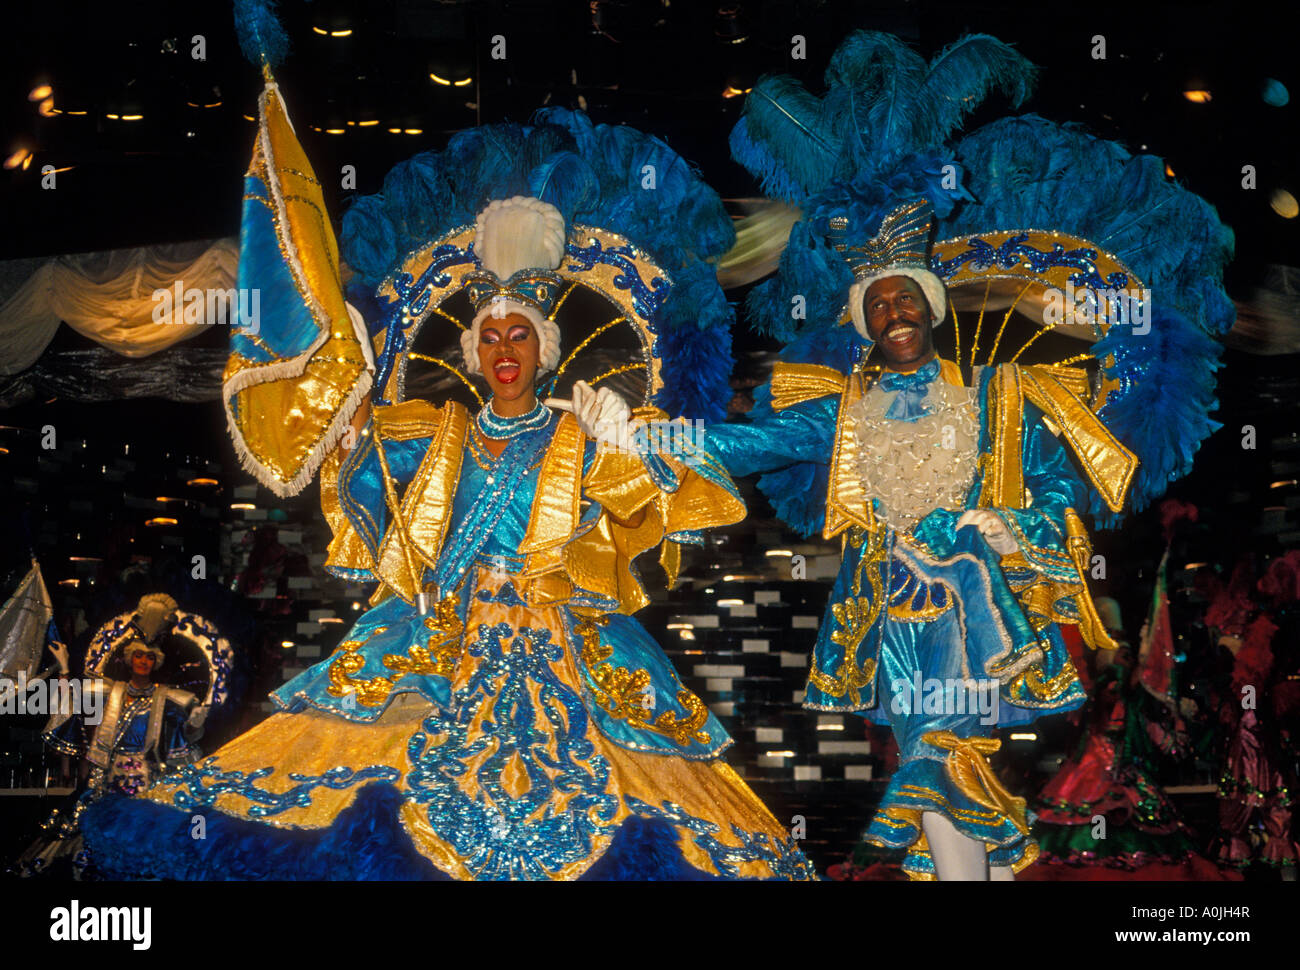 https://c8.alamy.com/comp/A0JH4R/brazilian-woman-brazilian-man-dancers-carnival-costume-nightclub-performance-A0JH4R.jpg